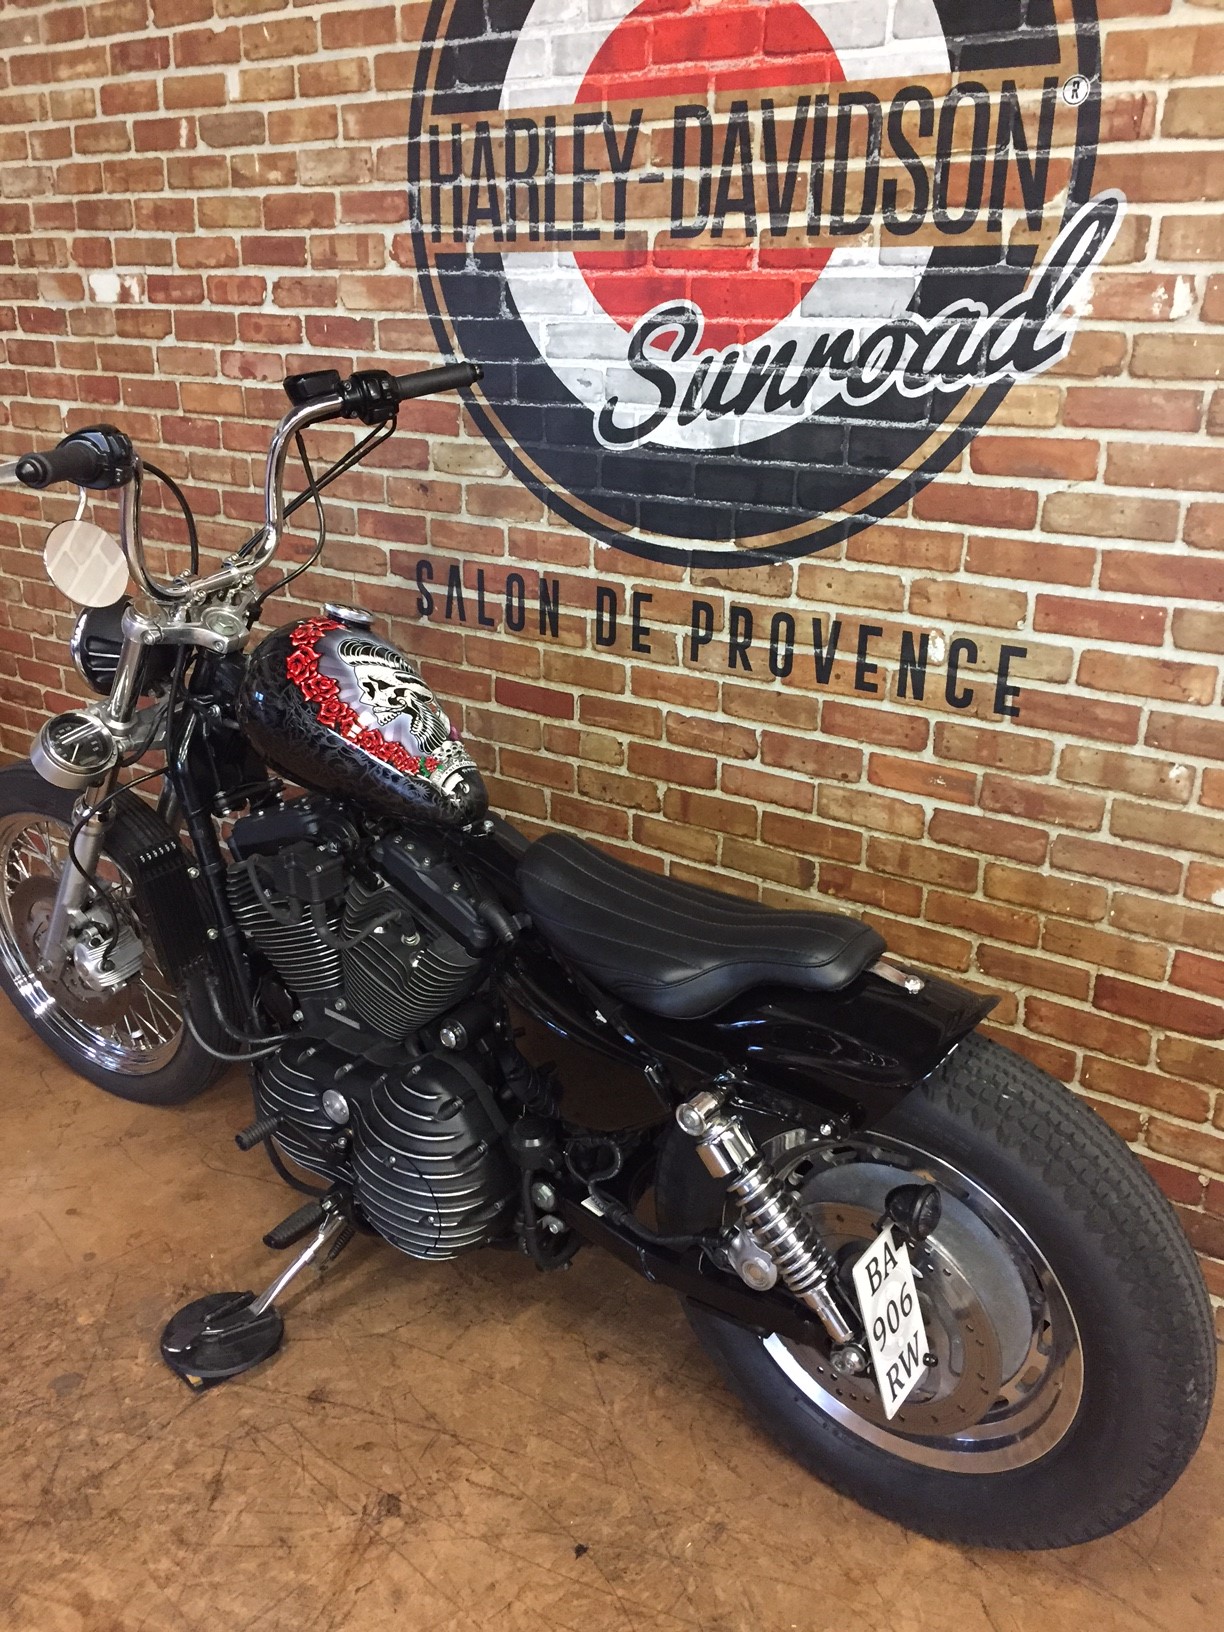 Pièces et accessoires – Harley-Davidson Sunroad